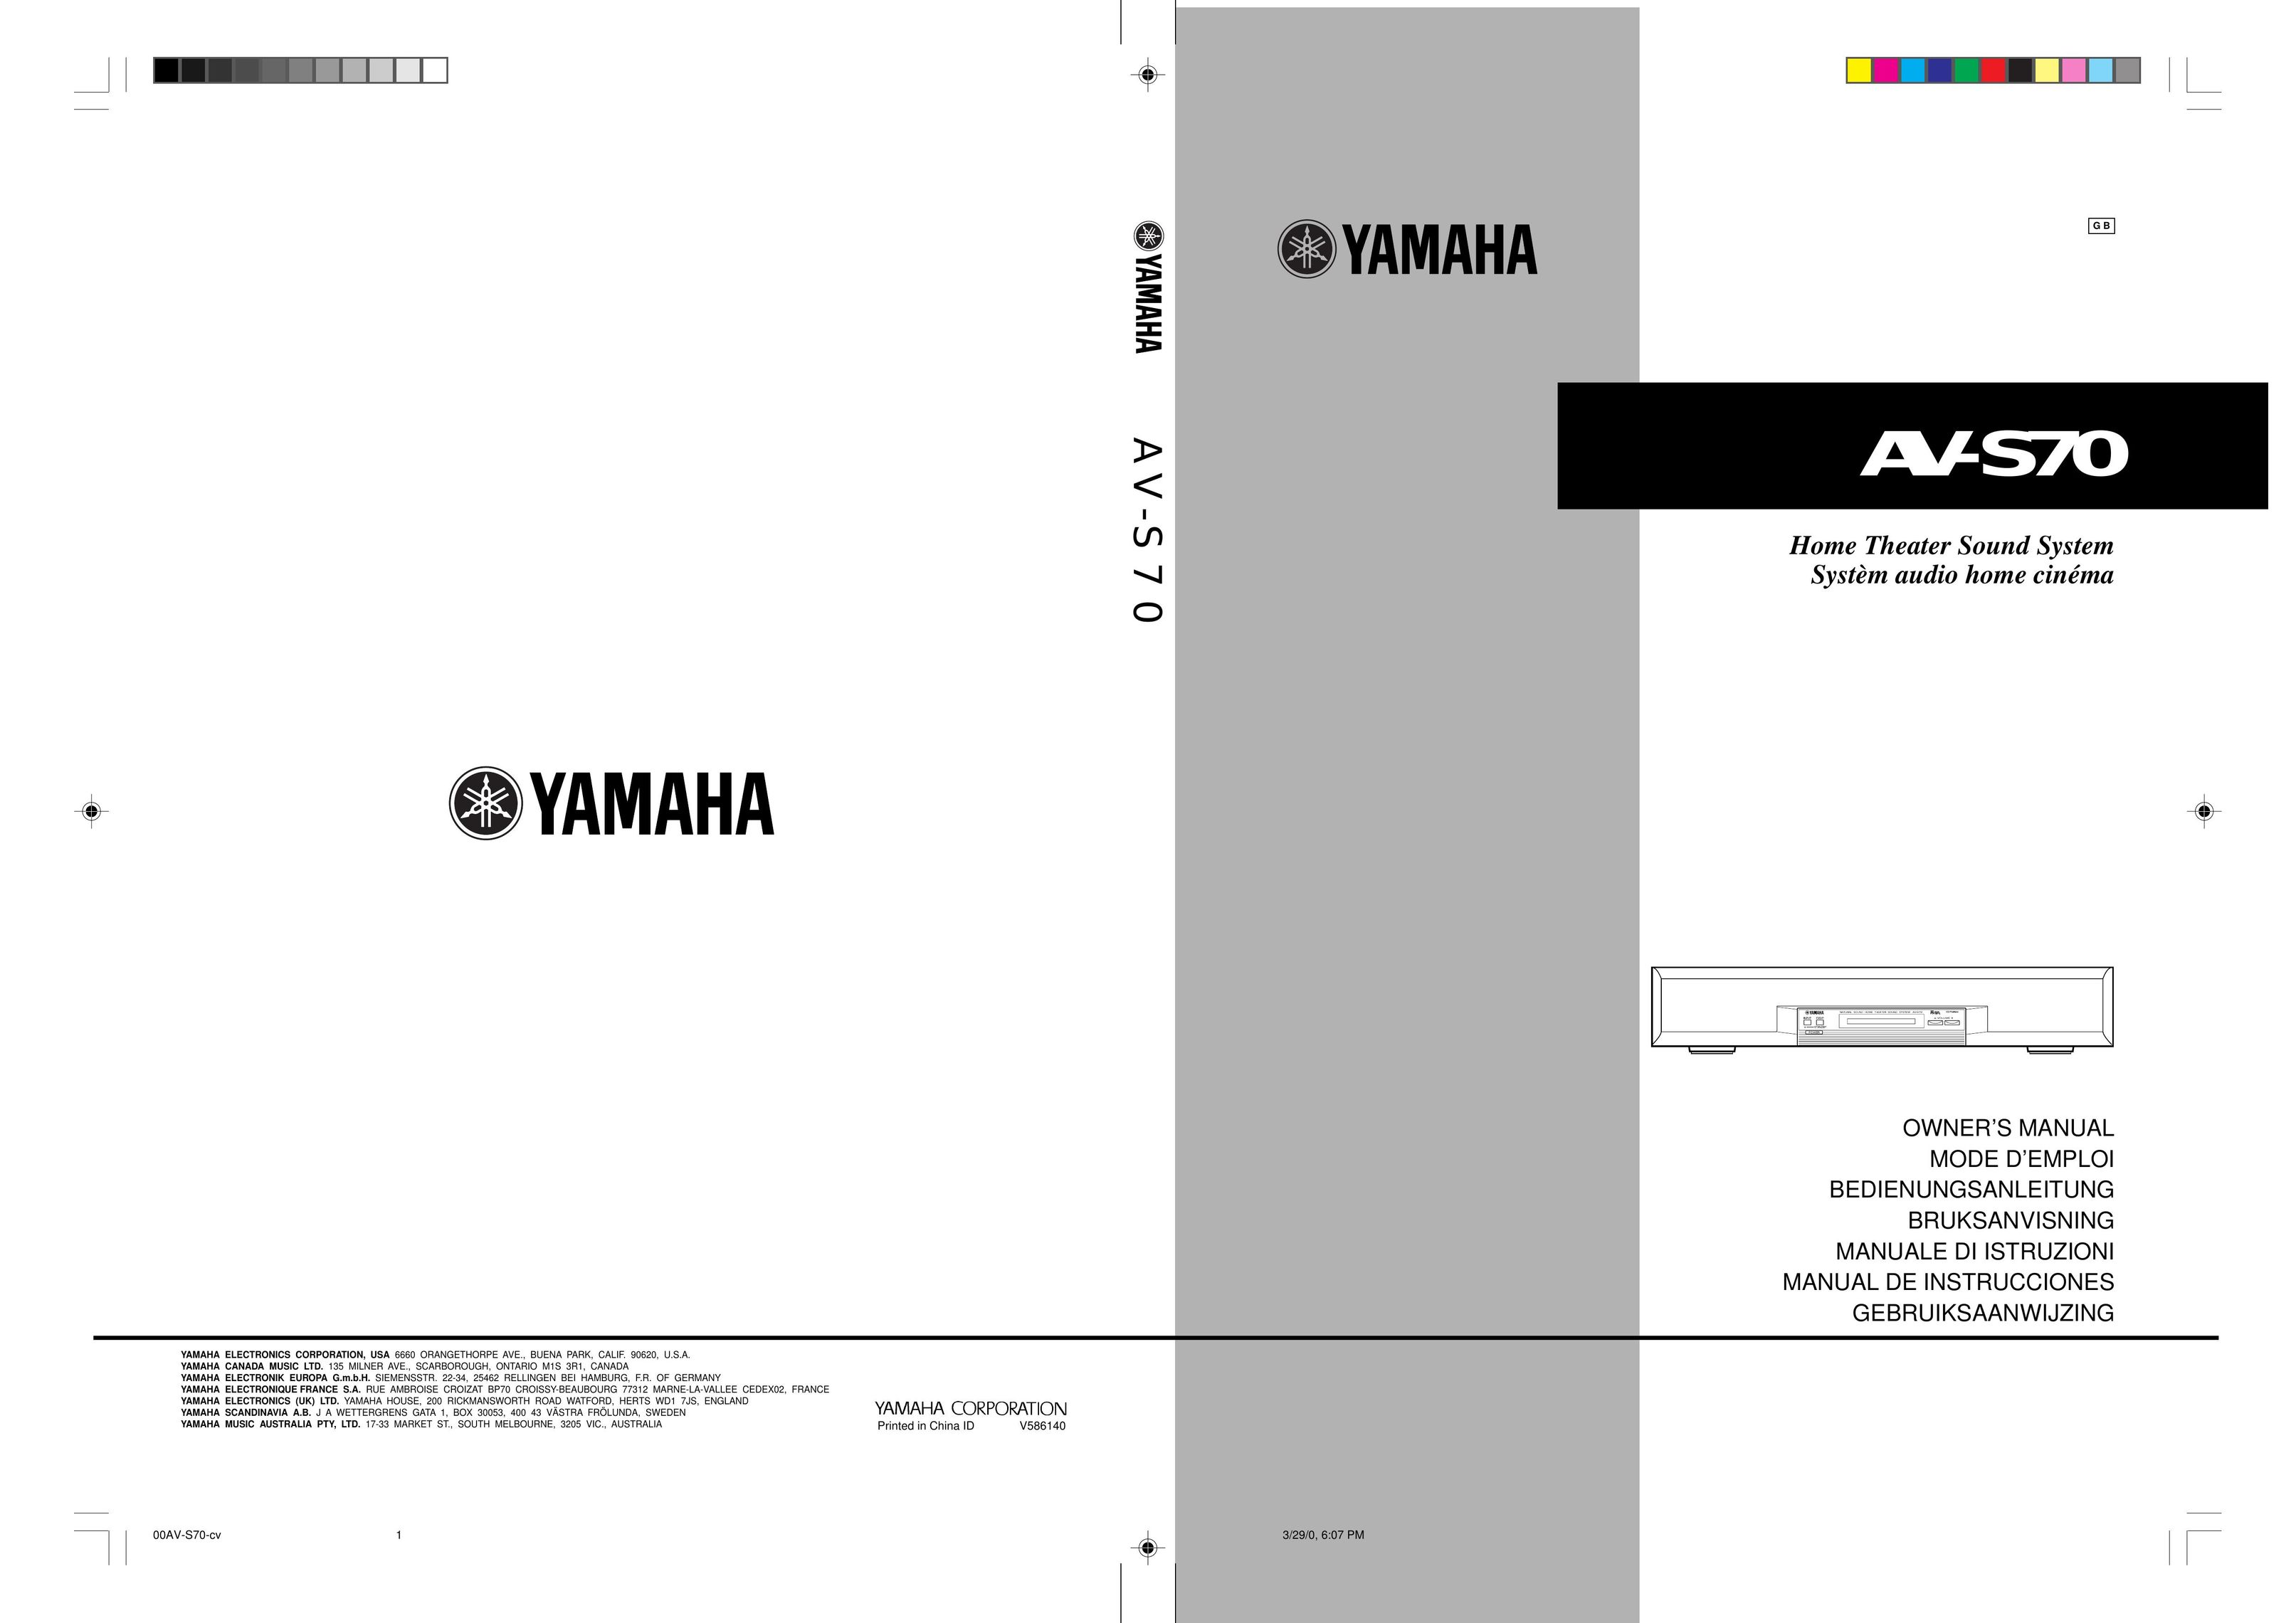 Yamaha AV-S70 Home Theater System User Manual